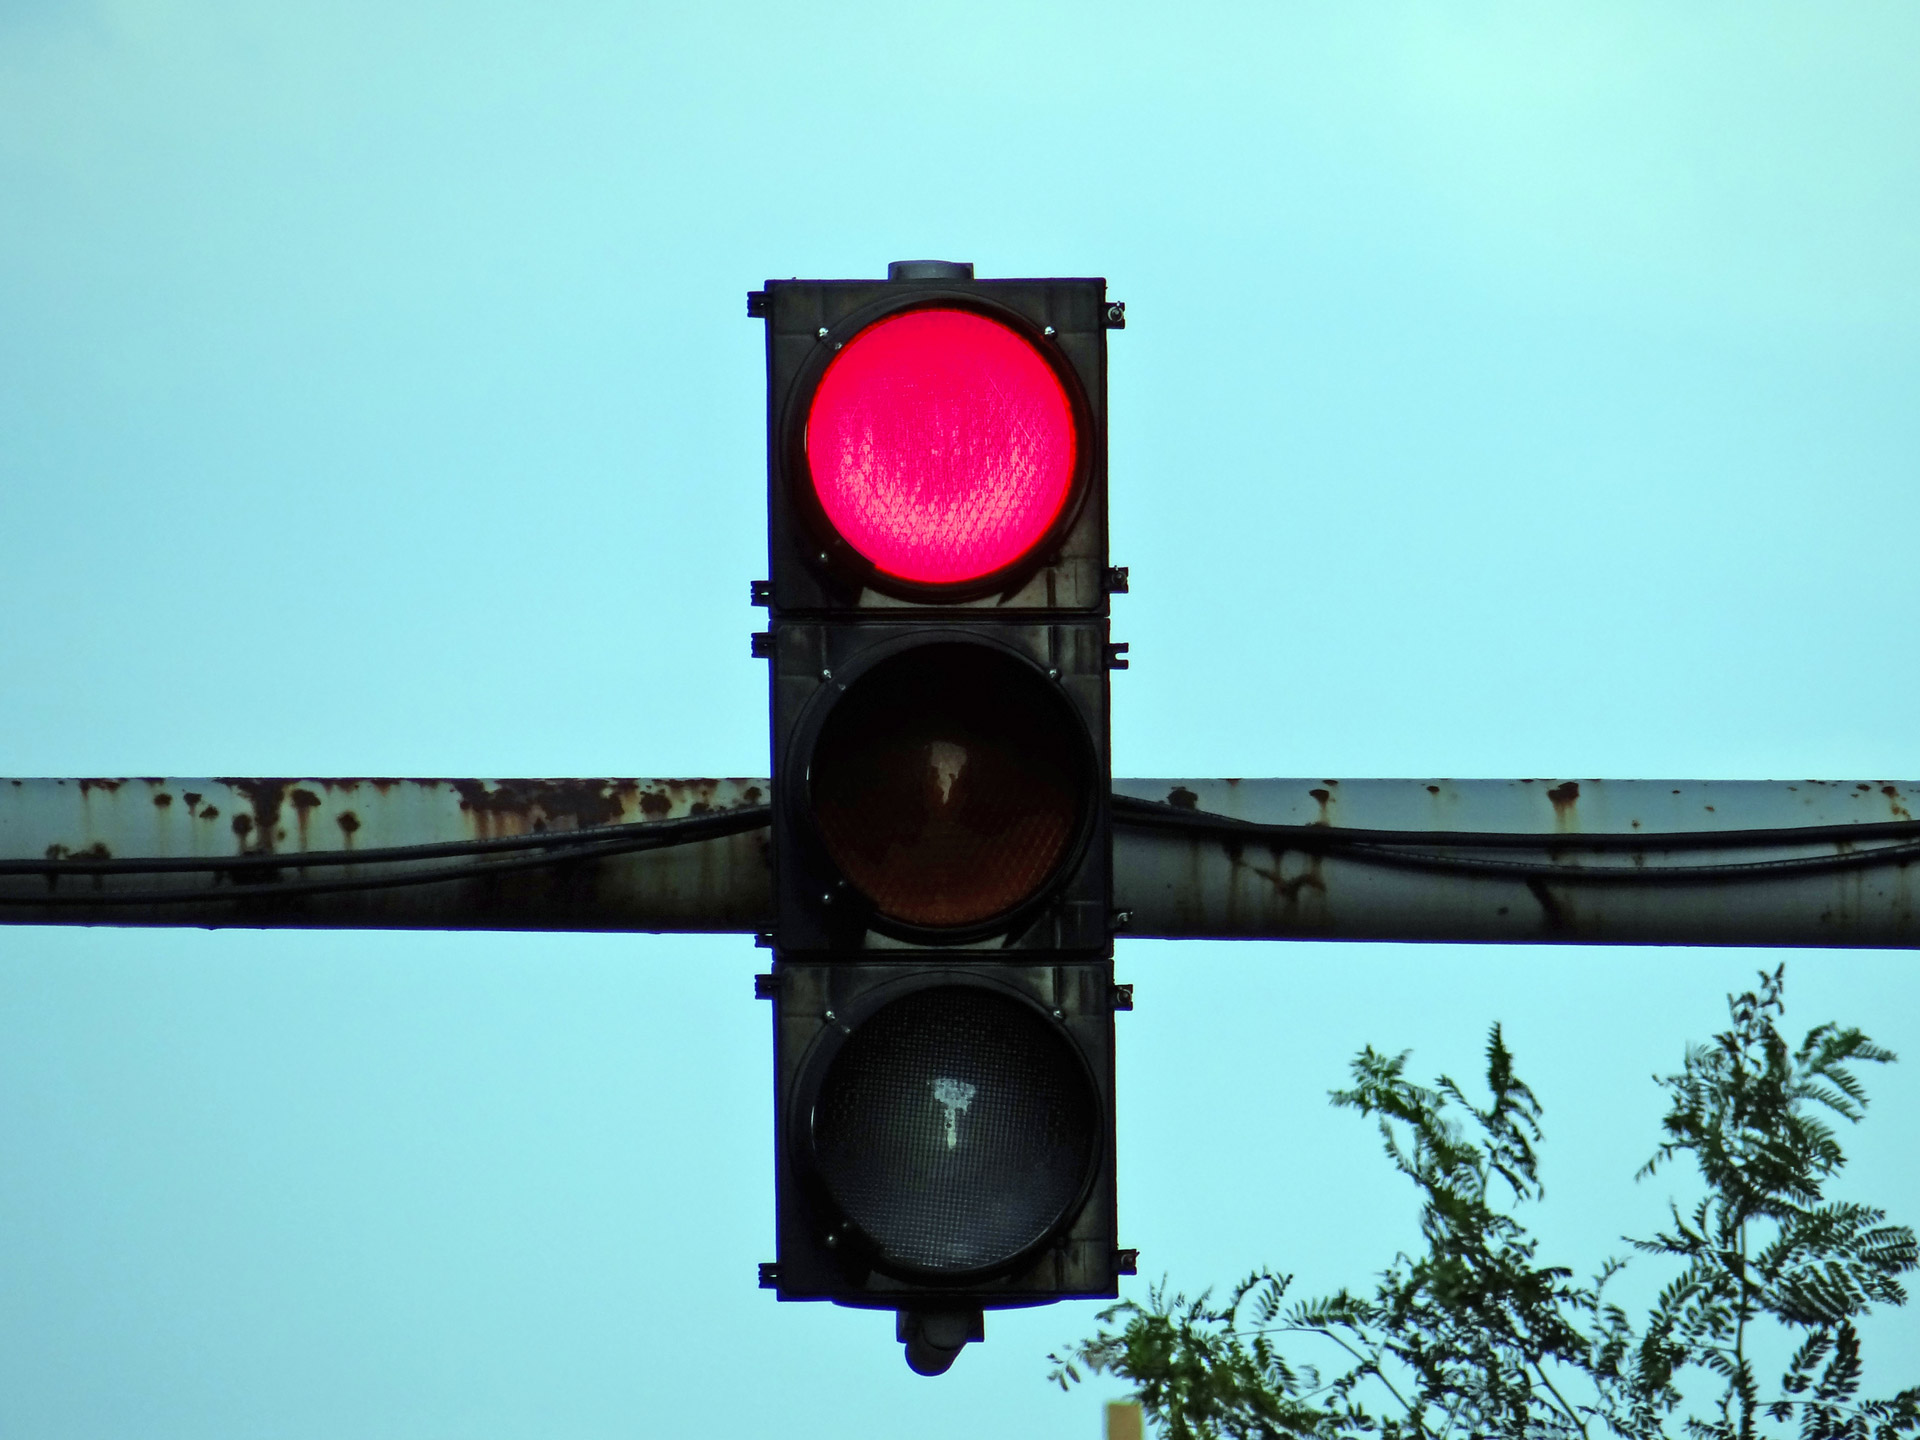 Traffic light red. Красный светофор. Красный сигнал светофора. Запрещающий сигнал светофора. Красный цвет светофора.